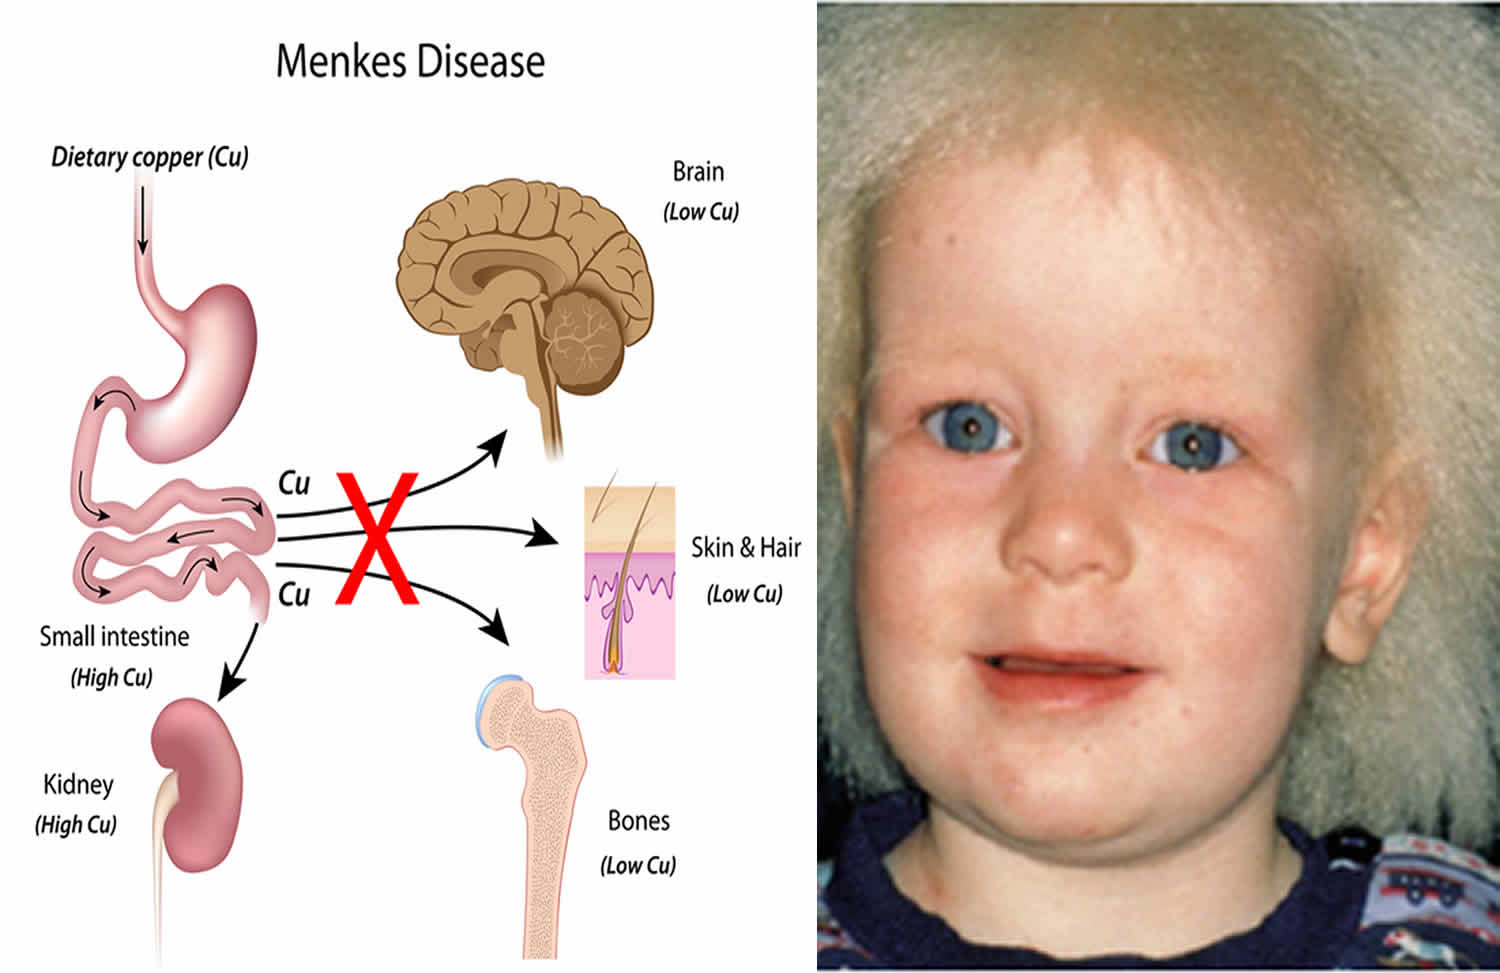 Menkes病：症状体征、病因、流行病学、诊断和治疗